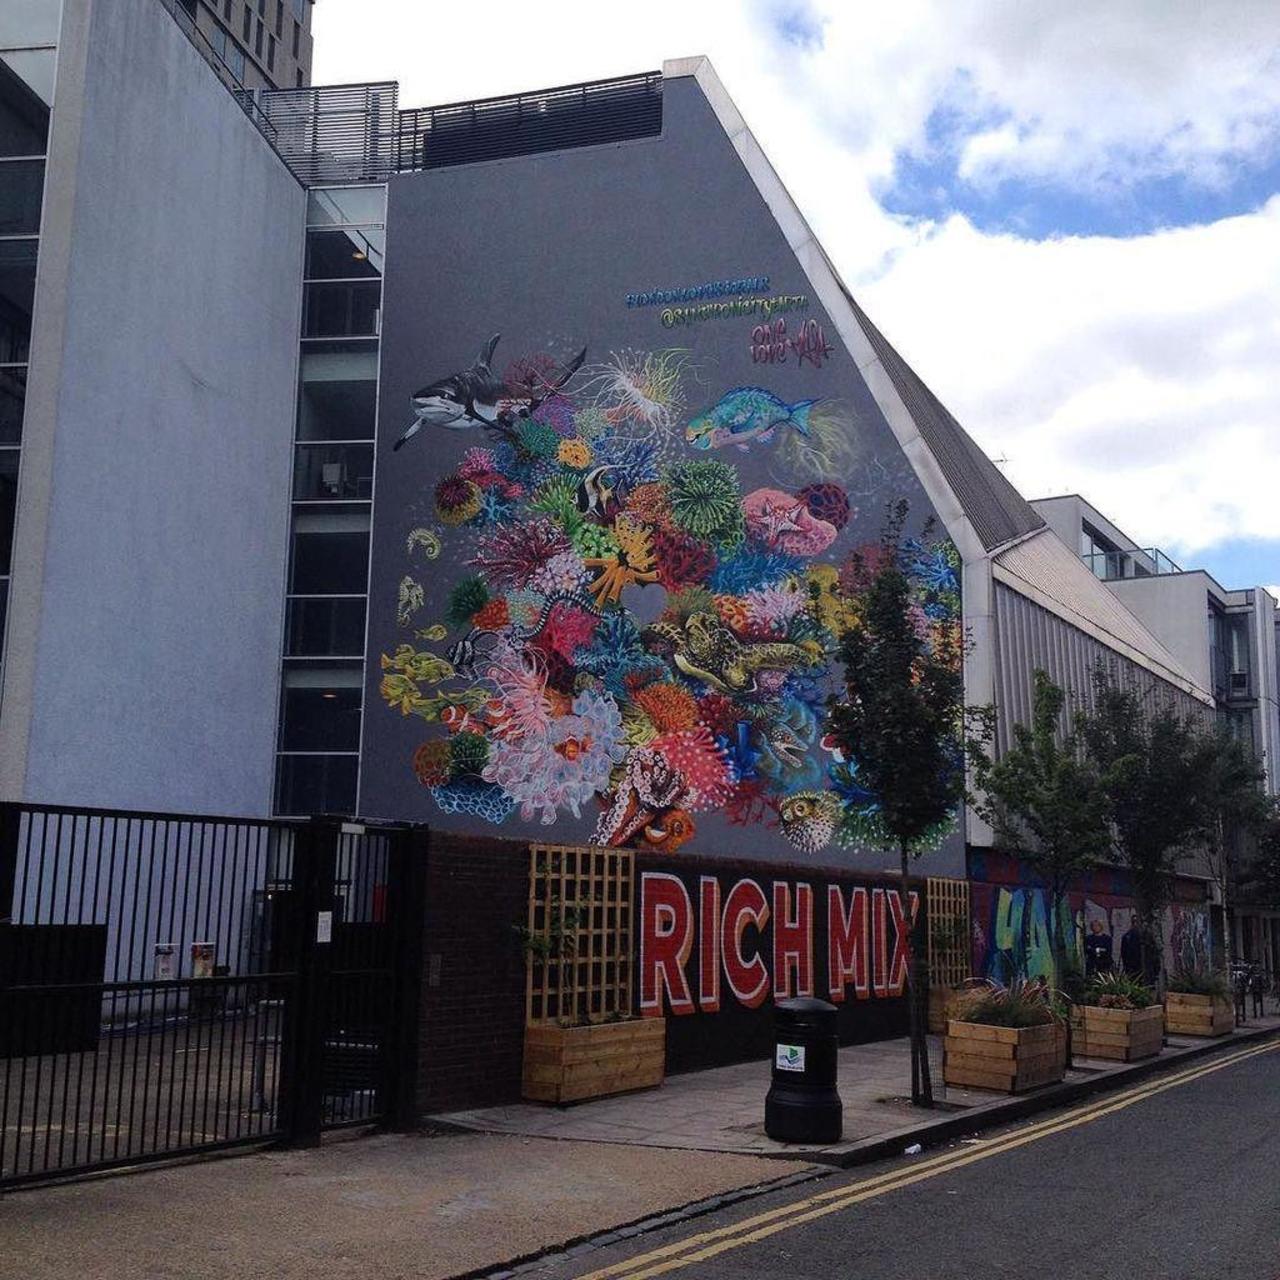 #streetart #graffiti #streetartlondon #london #thisislondon by isadarko http://t.co/d0wqbPJ225